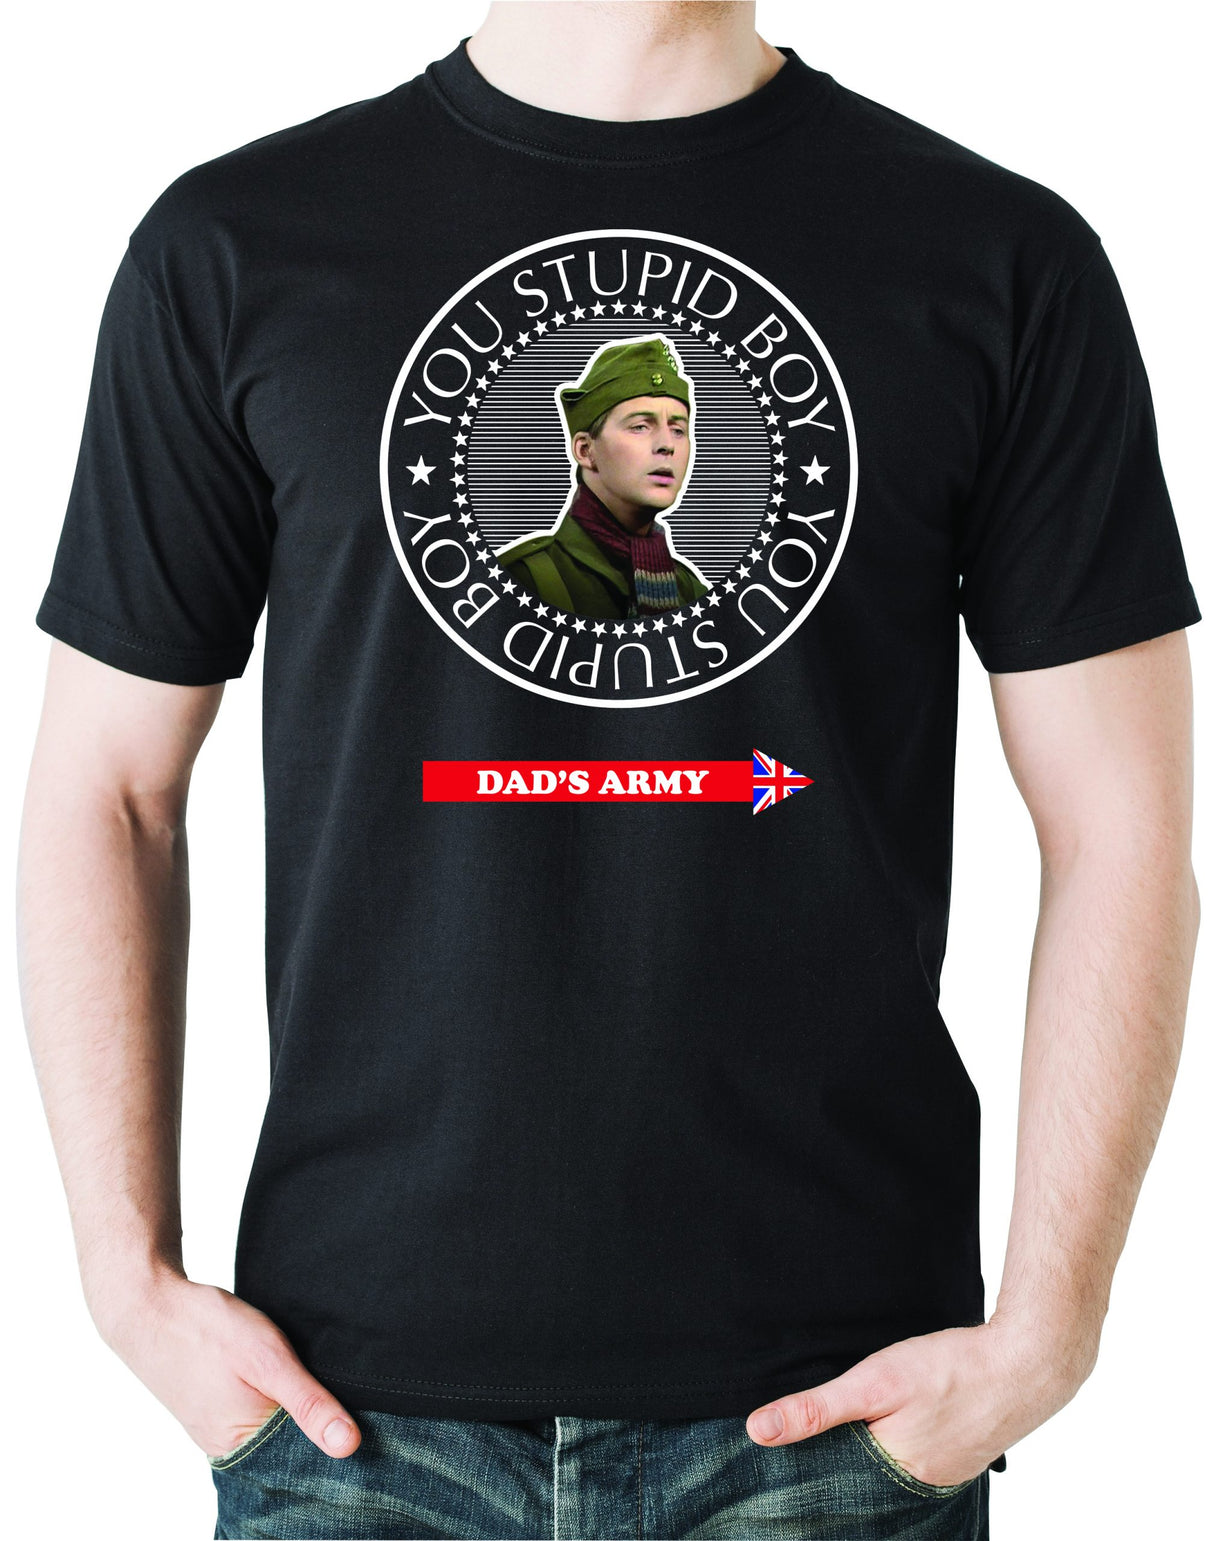 Dads Army T-shirt: You Stupid Boy